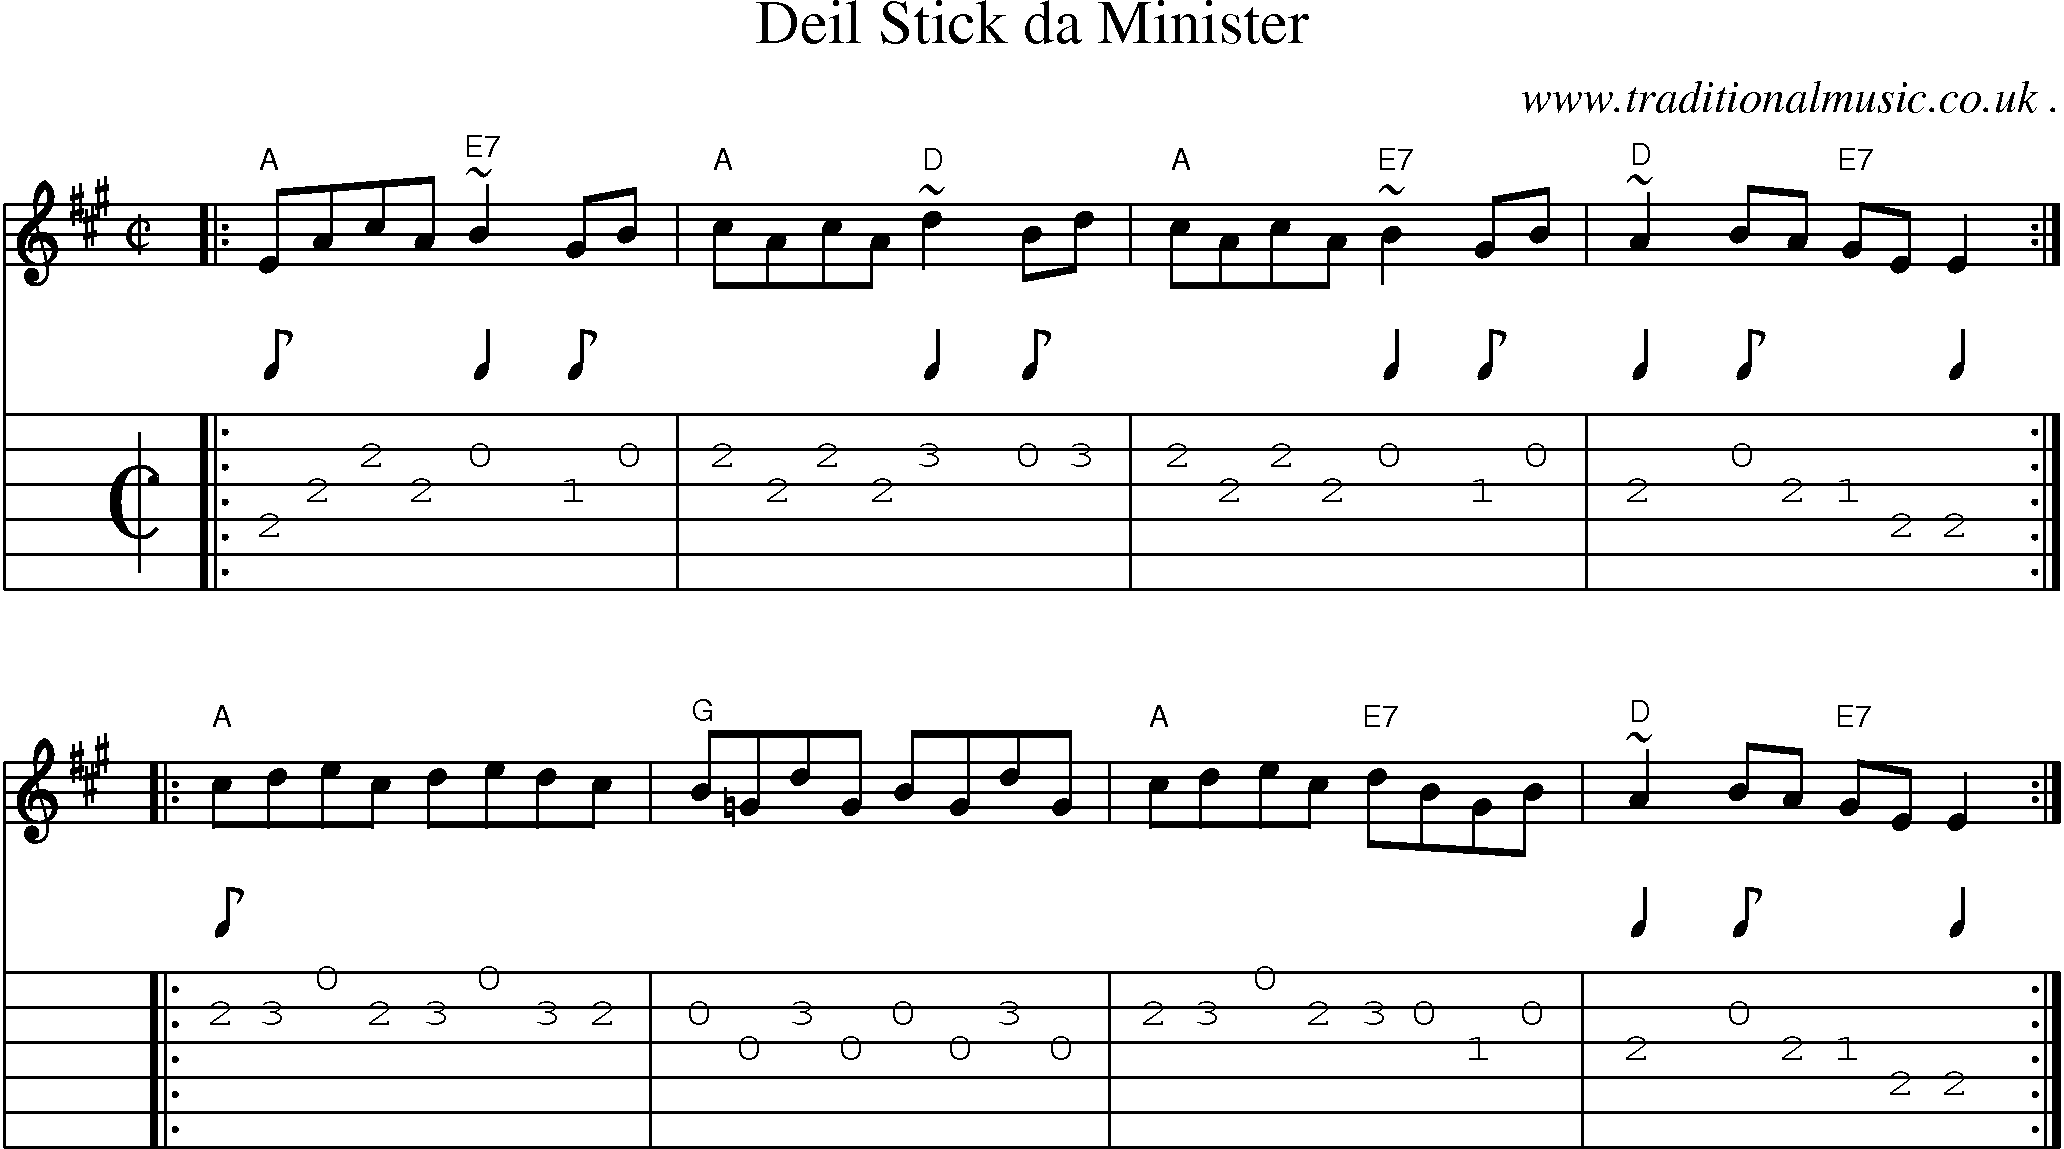 Sheet-music  score, Chords and Guitar Tabs for Deil Stick Da Minister